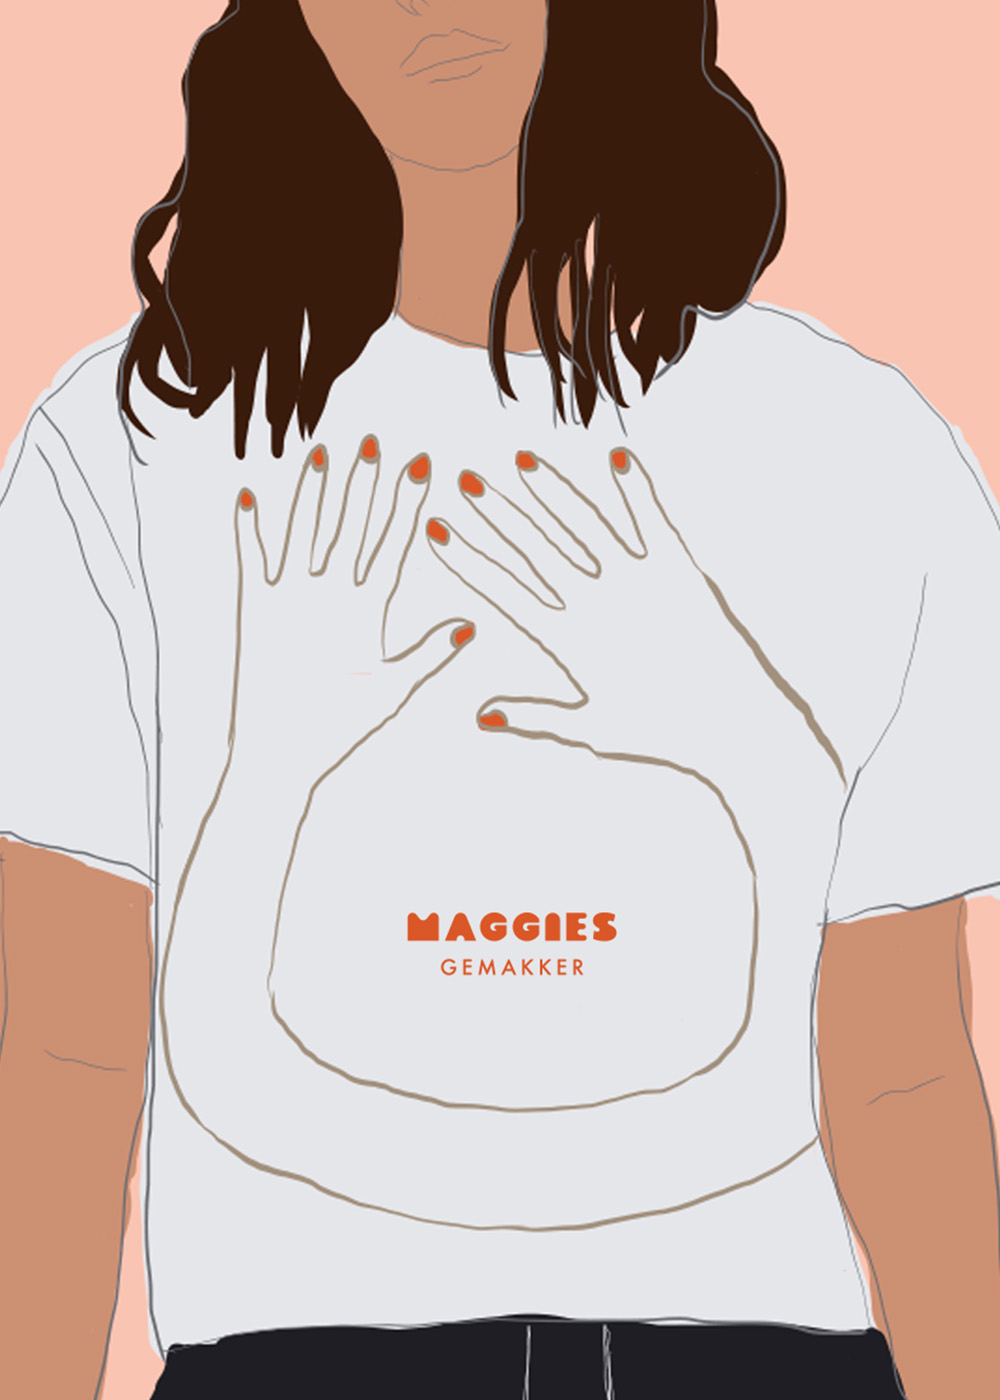 Maggies-logo-visual-identity-girl